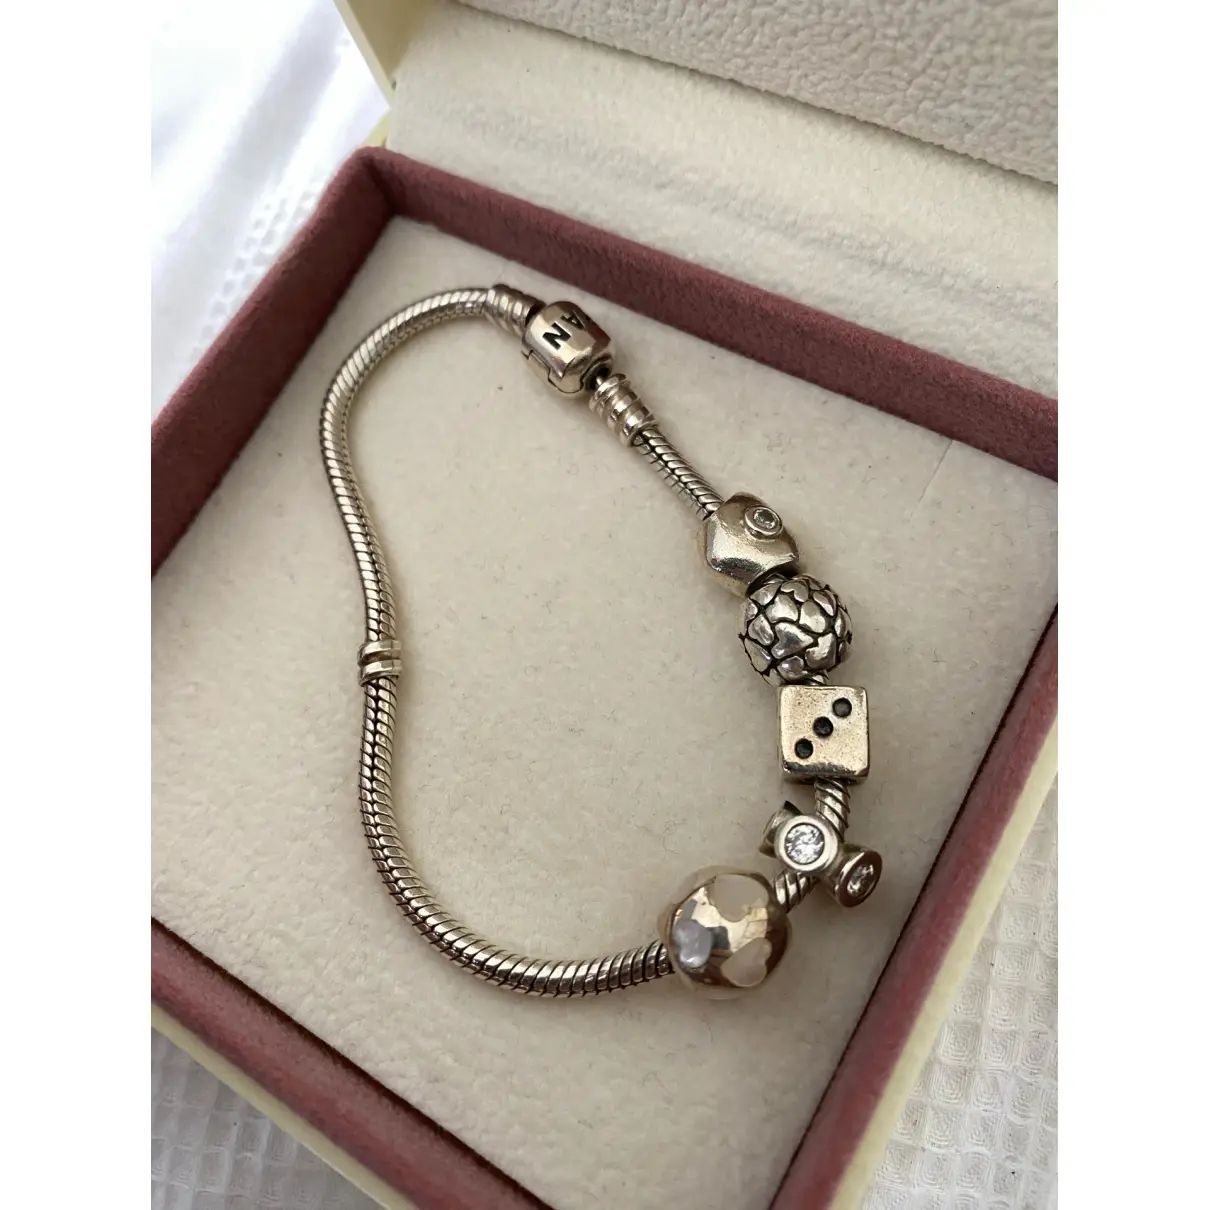 Buy Pandora Silver bracelet online